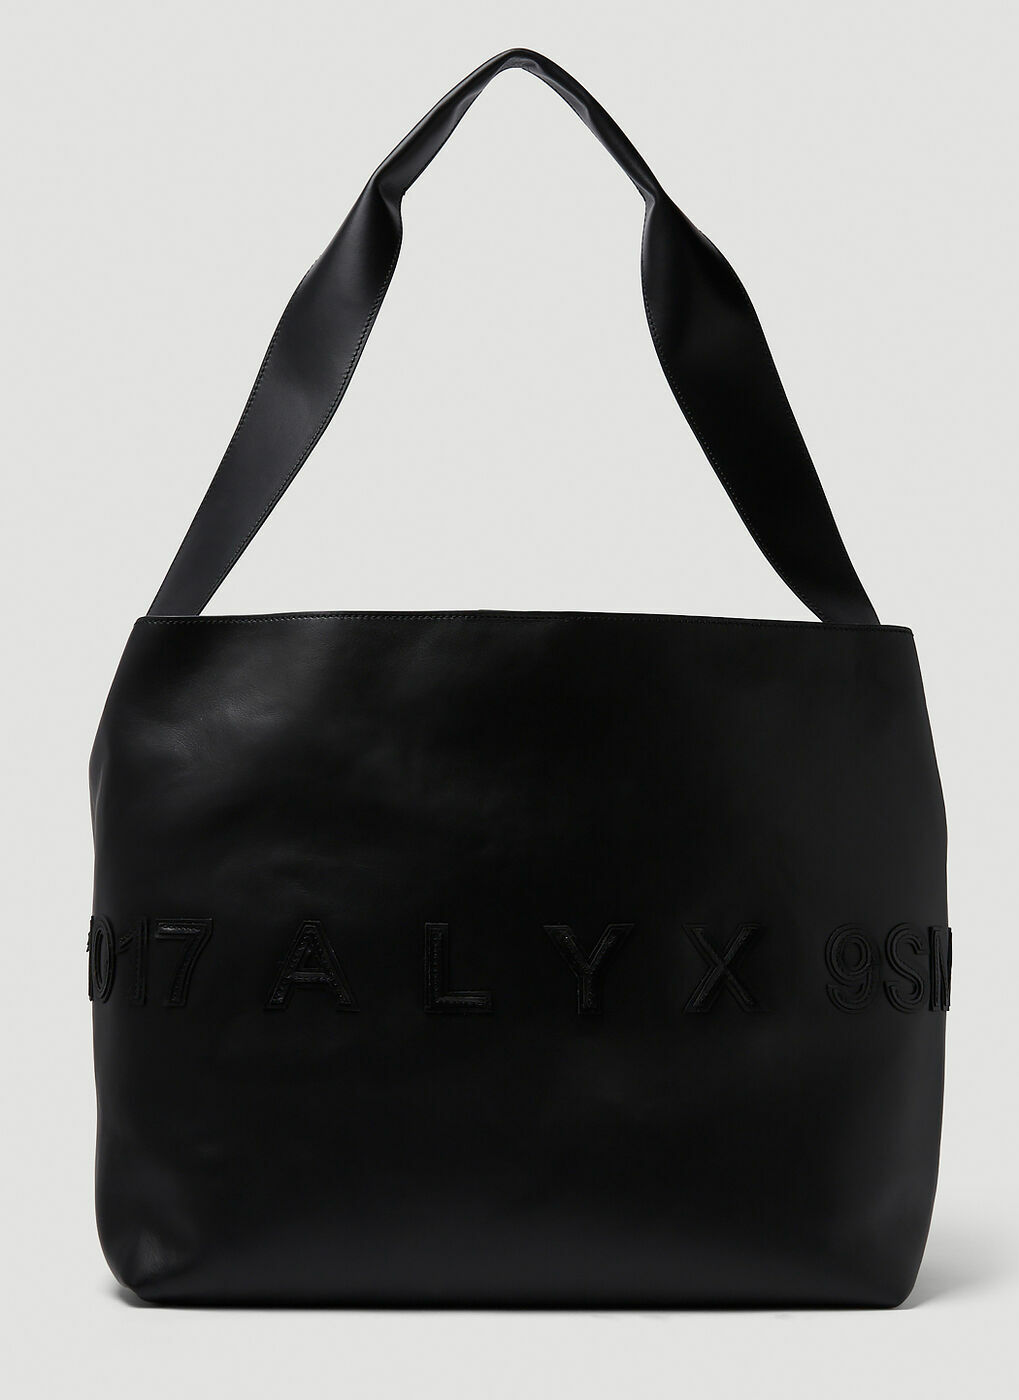 Constellation Tote Bag in Black